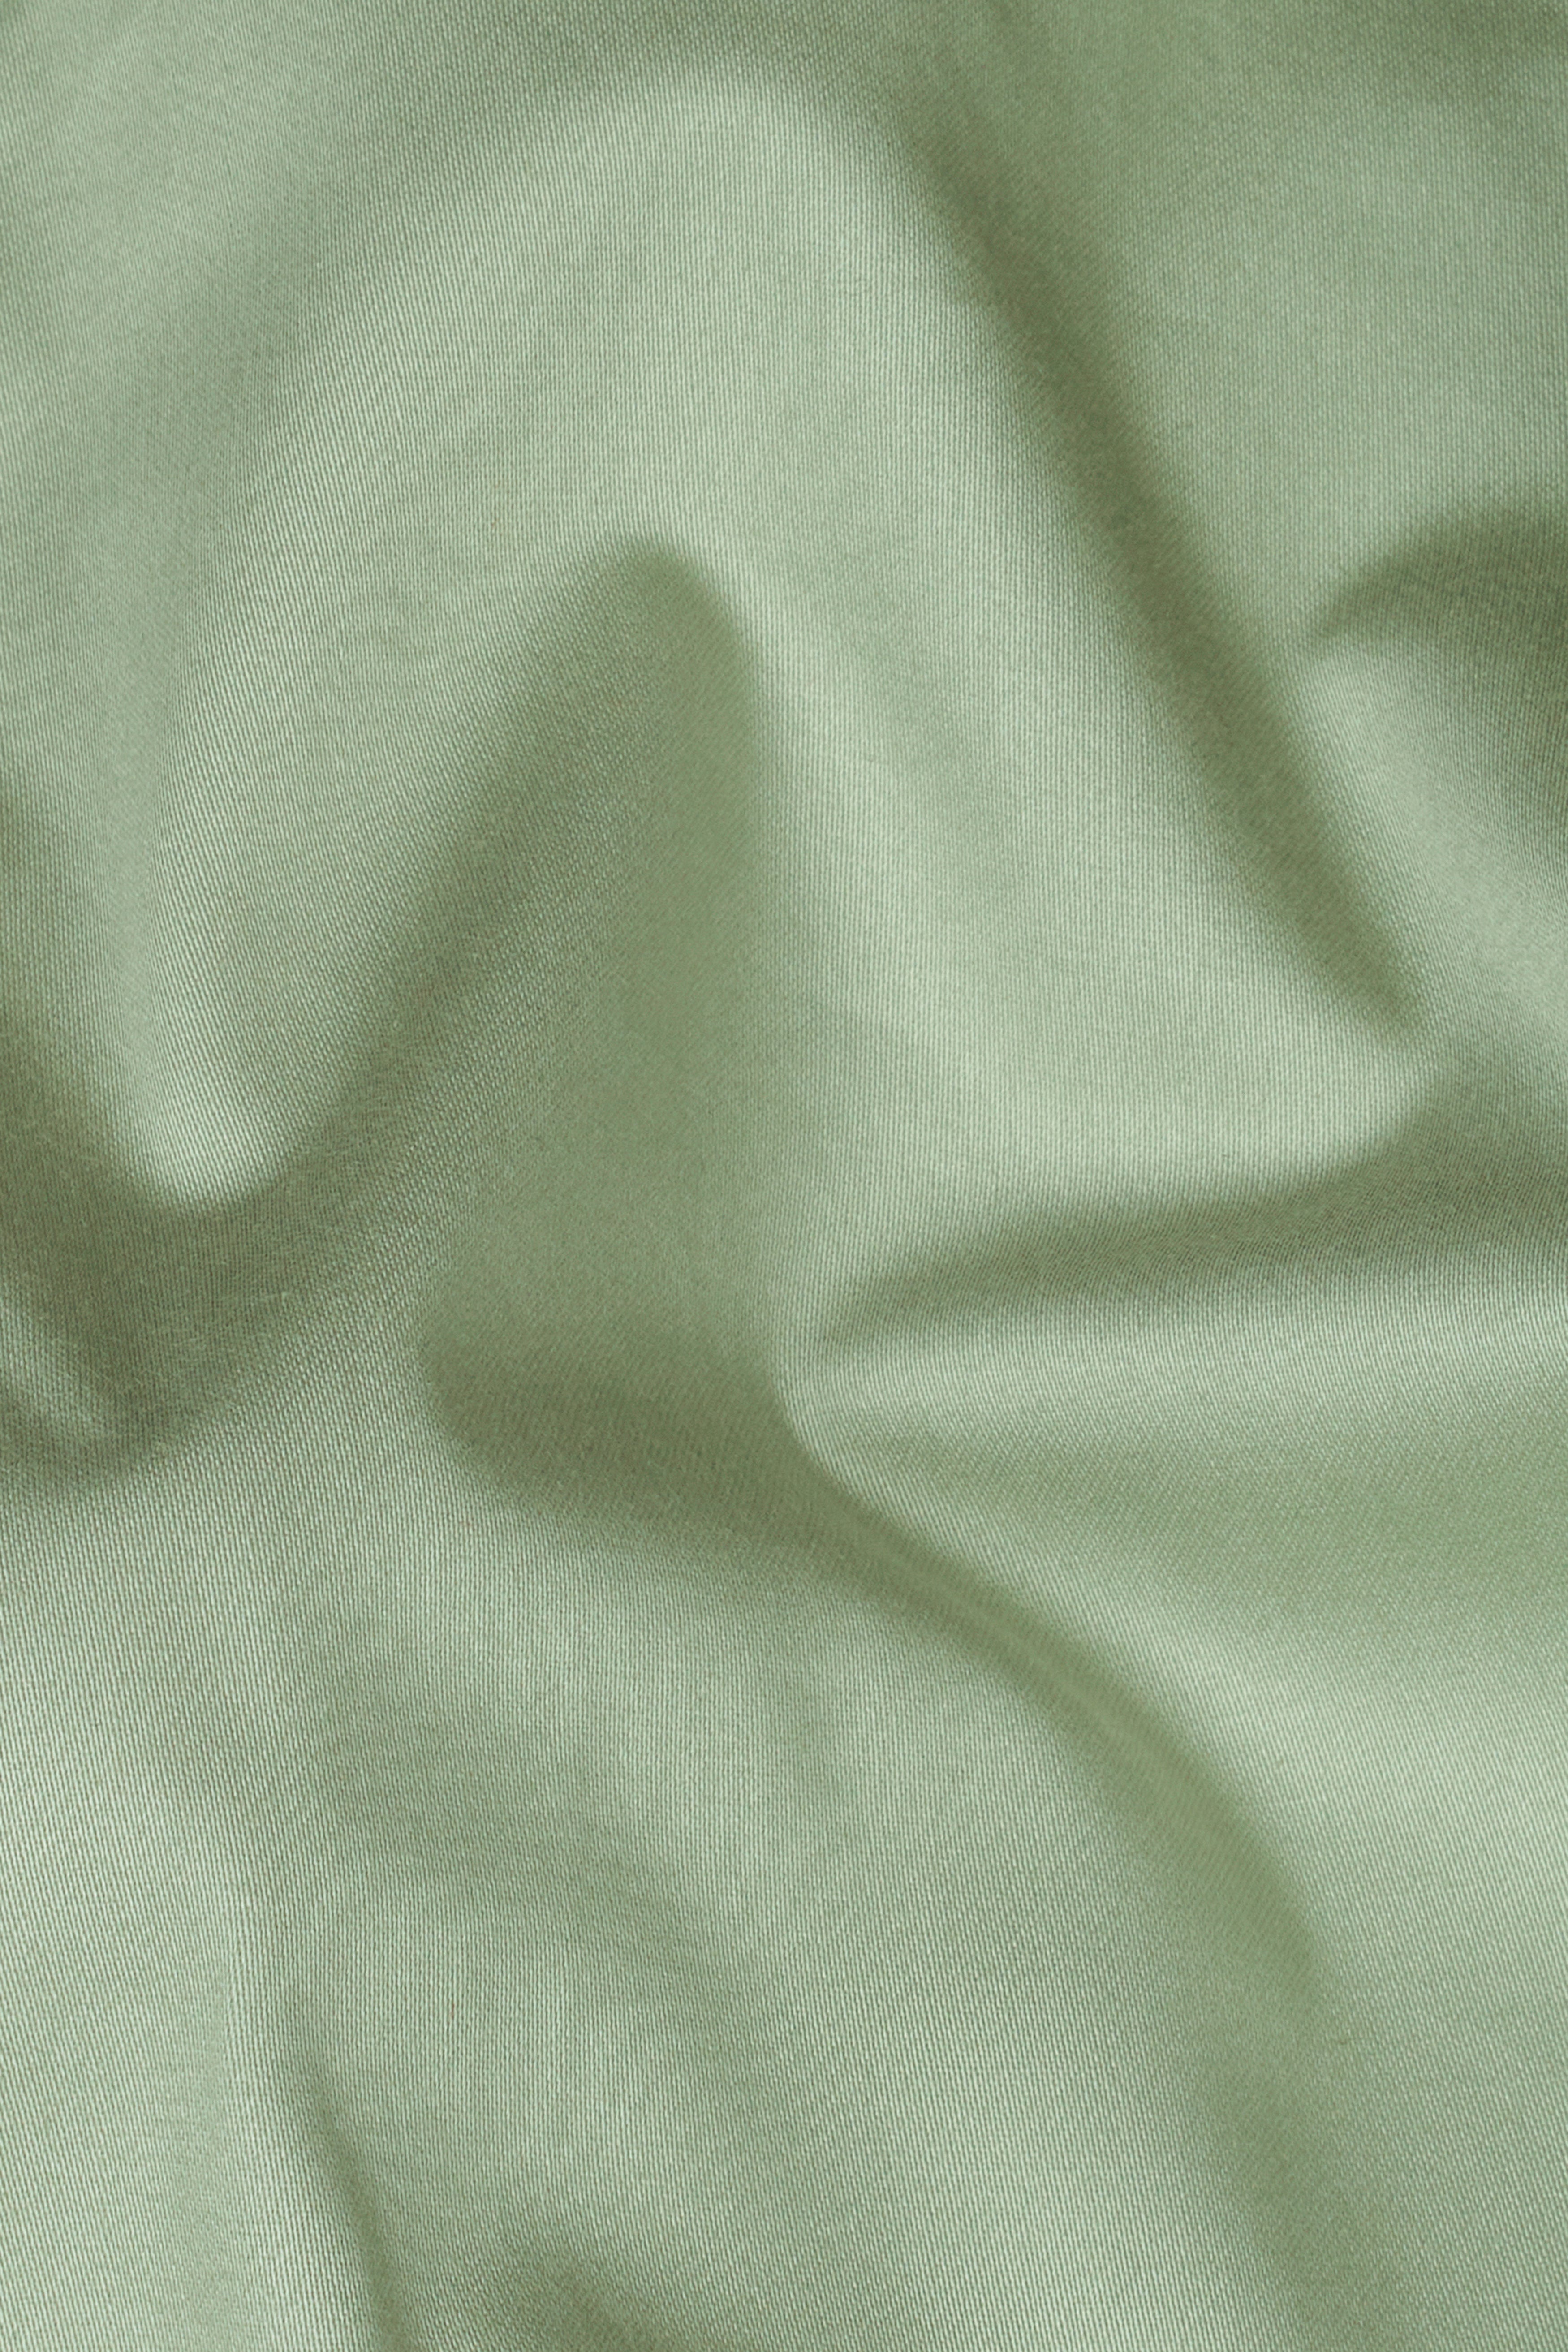 Asparagus Green with Horizontal Stitches Premium Cotton Pant T2814-28, T2814-30, T2814-32, T2814-34, T2814-36, T2814-38, T2814-40, T2814-42, T2814-44